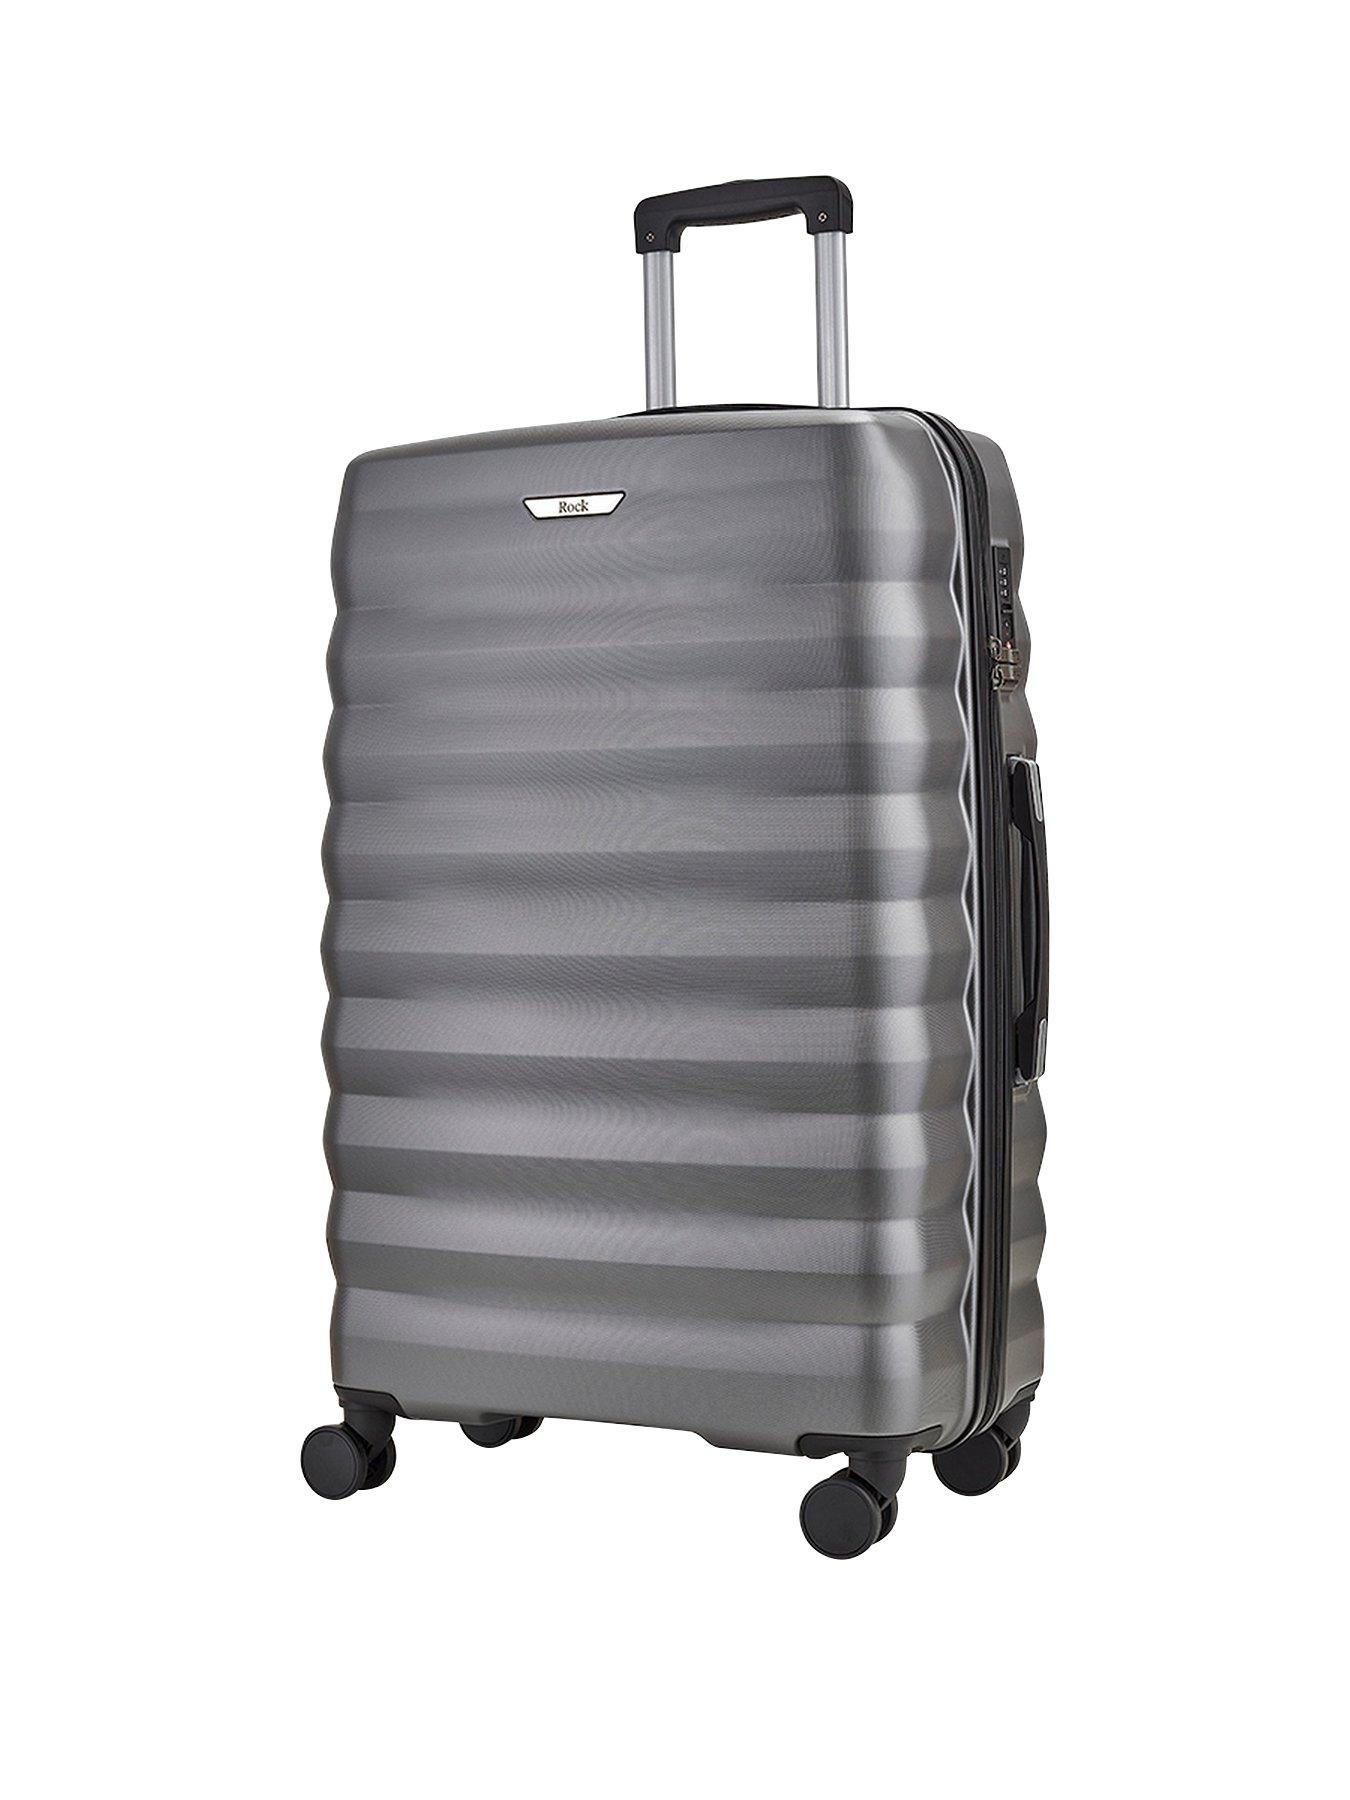 Rock Luggage Berlin 8 Wheel Hardshell Large Suitcase - Charcoal